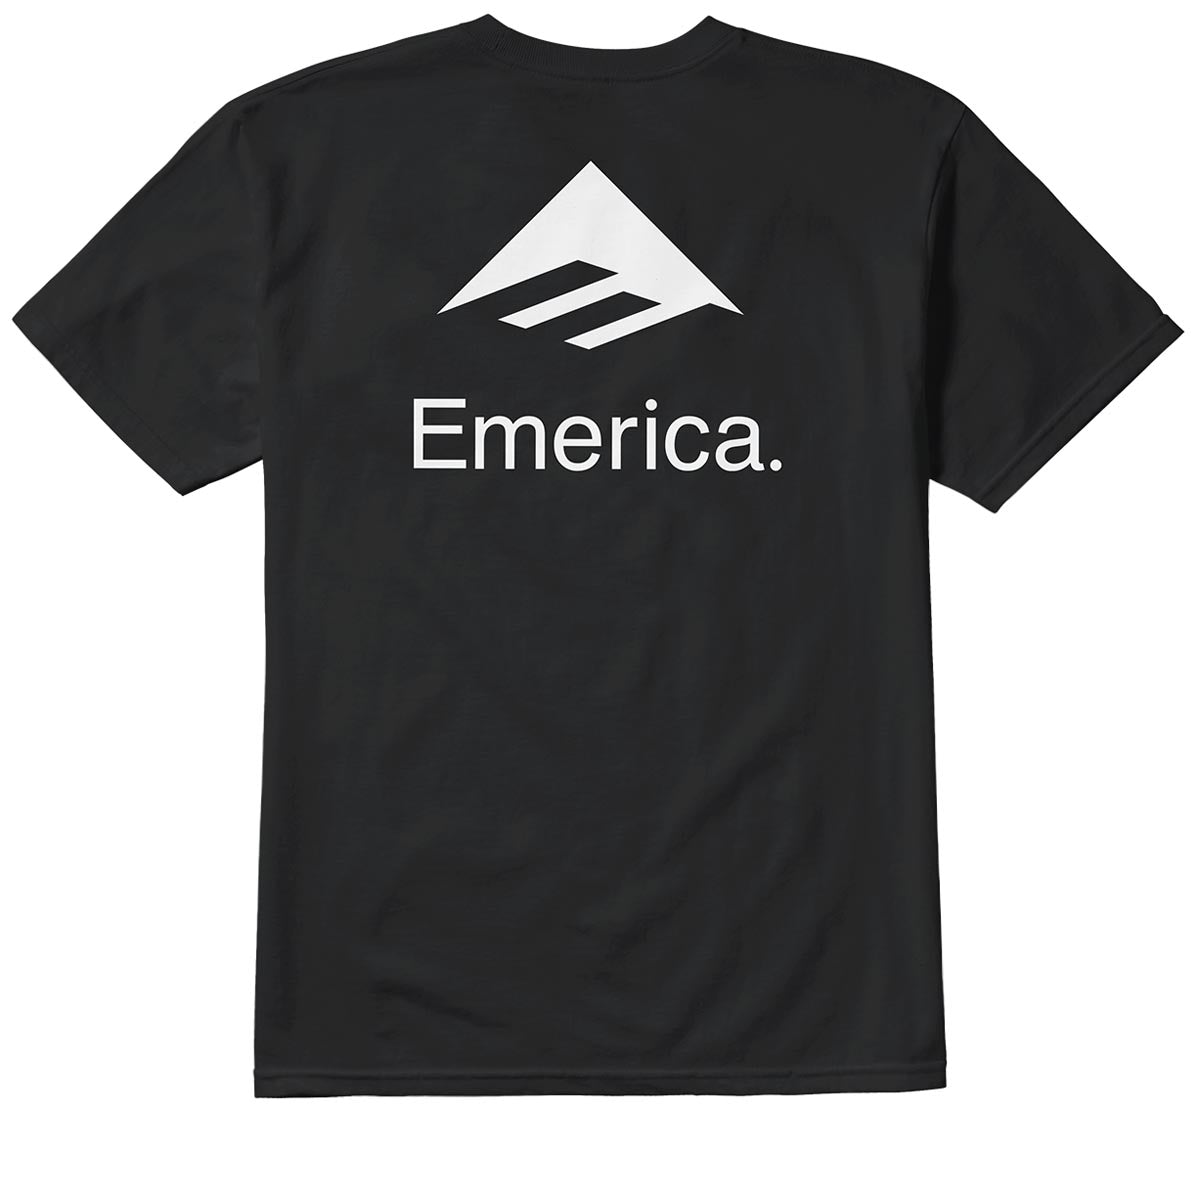 Emerica Lockup T-Shirt - Black image 2